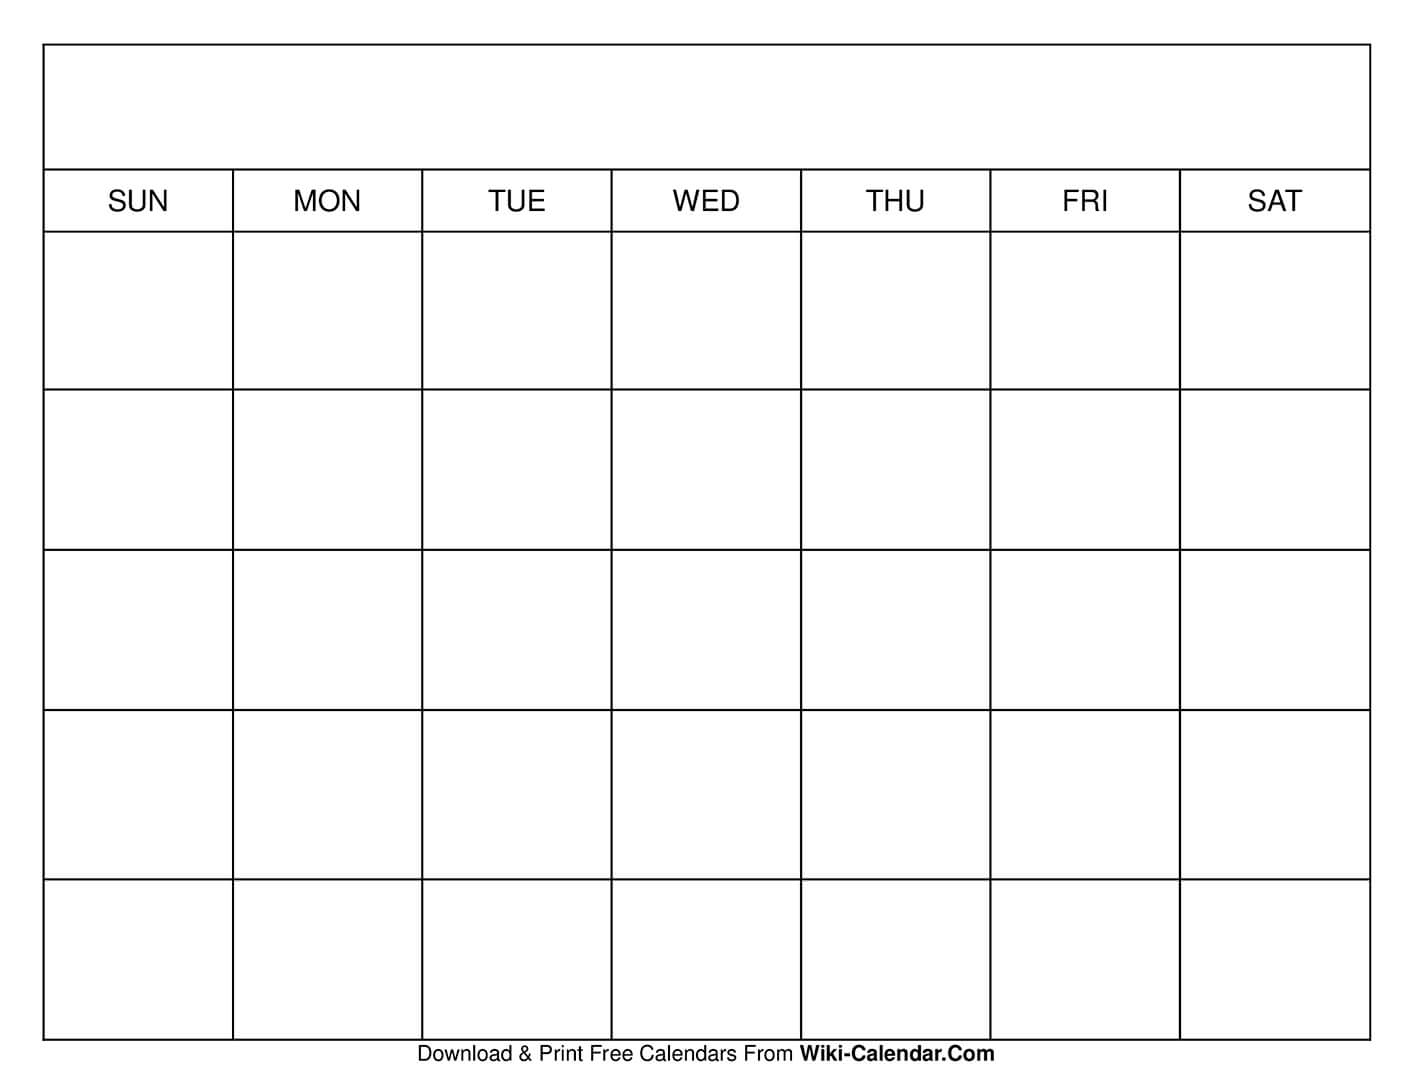 Get Blank Calendar Weekdays Only